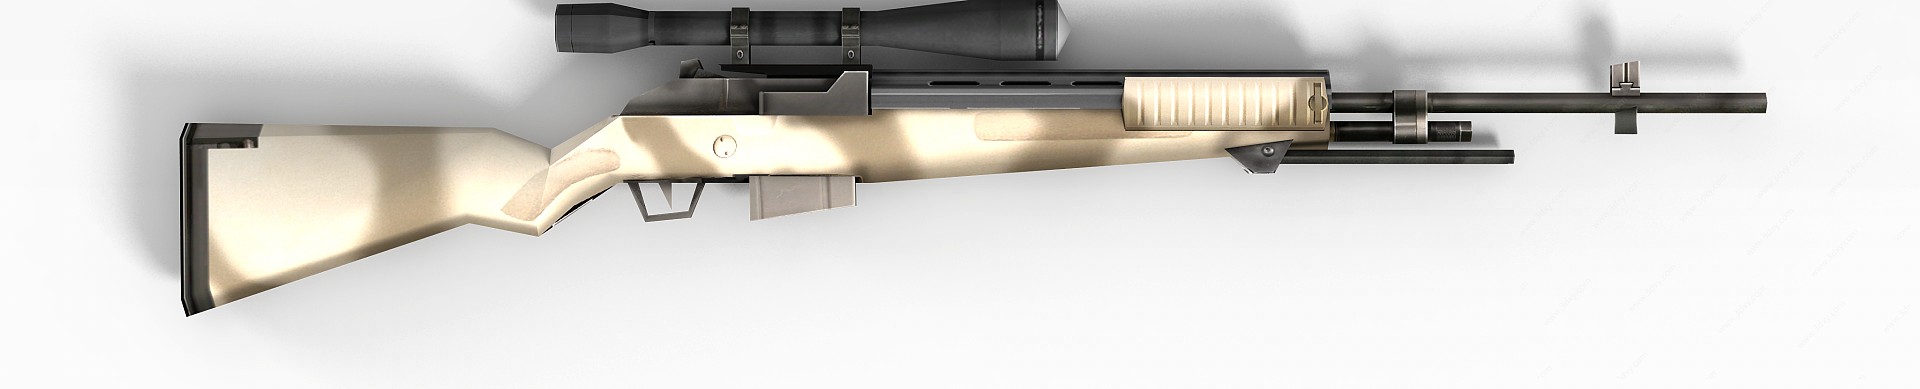 COD5武器狙击枪3D模型